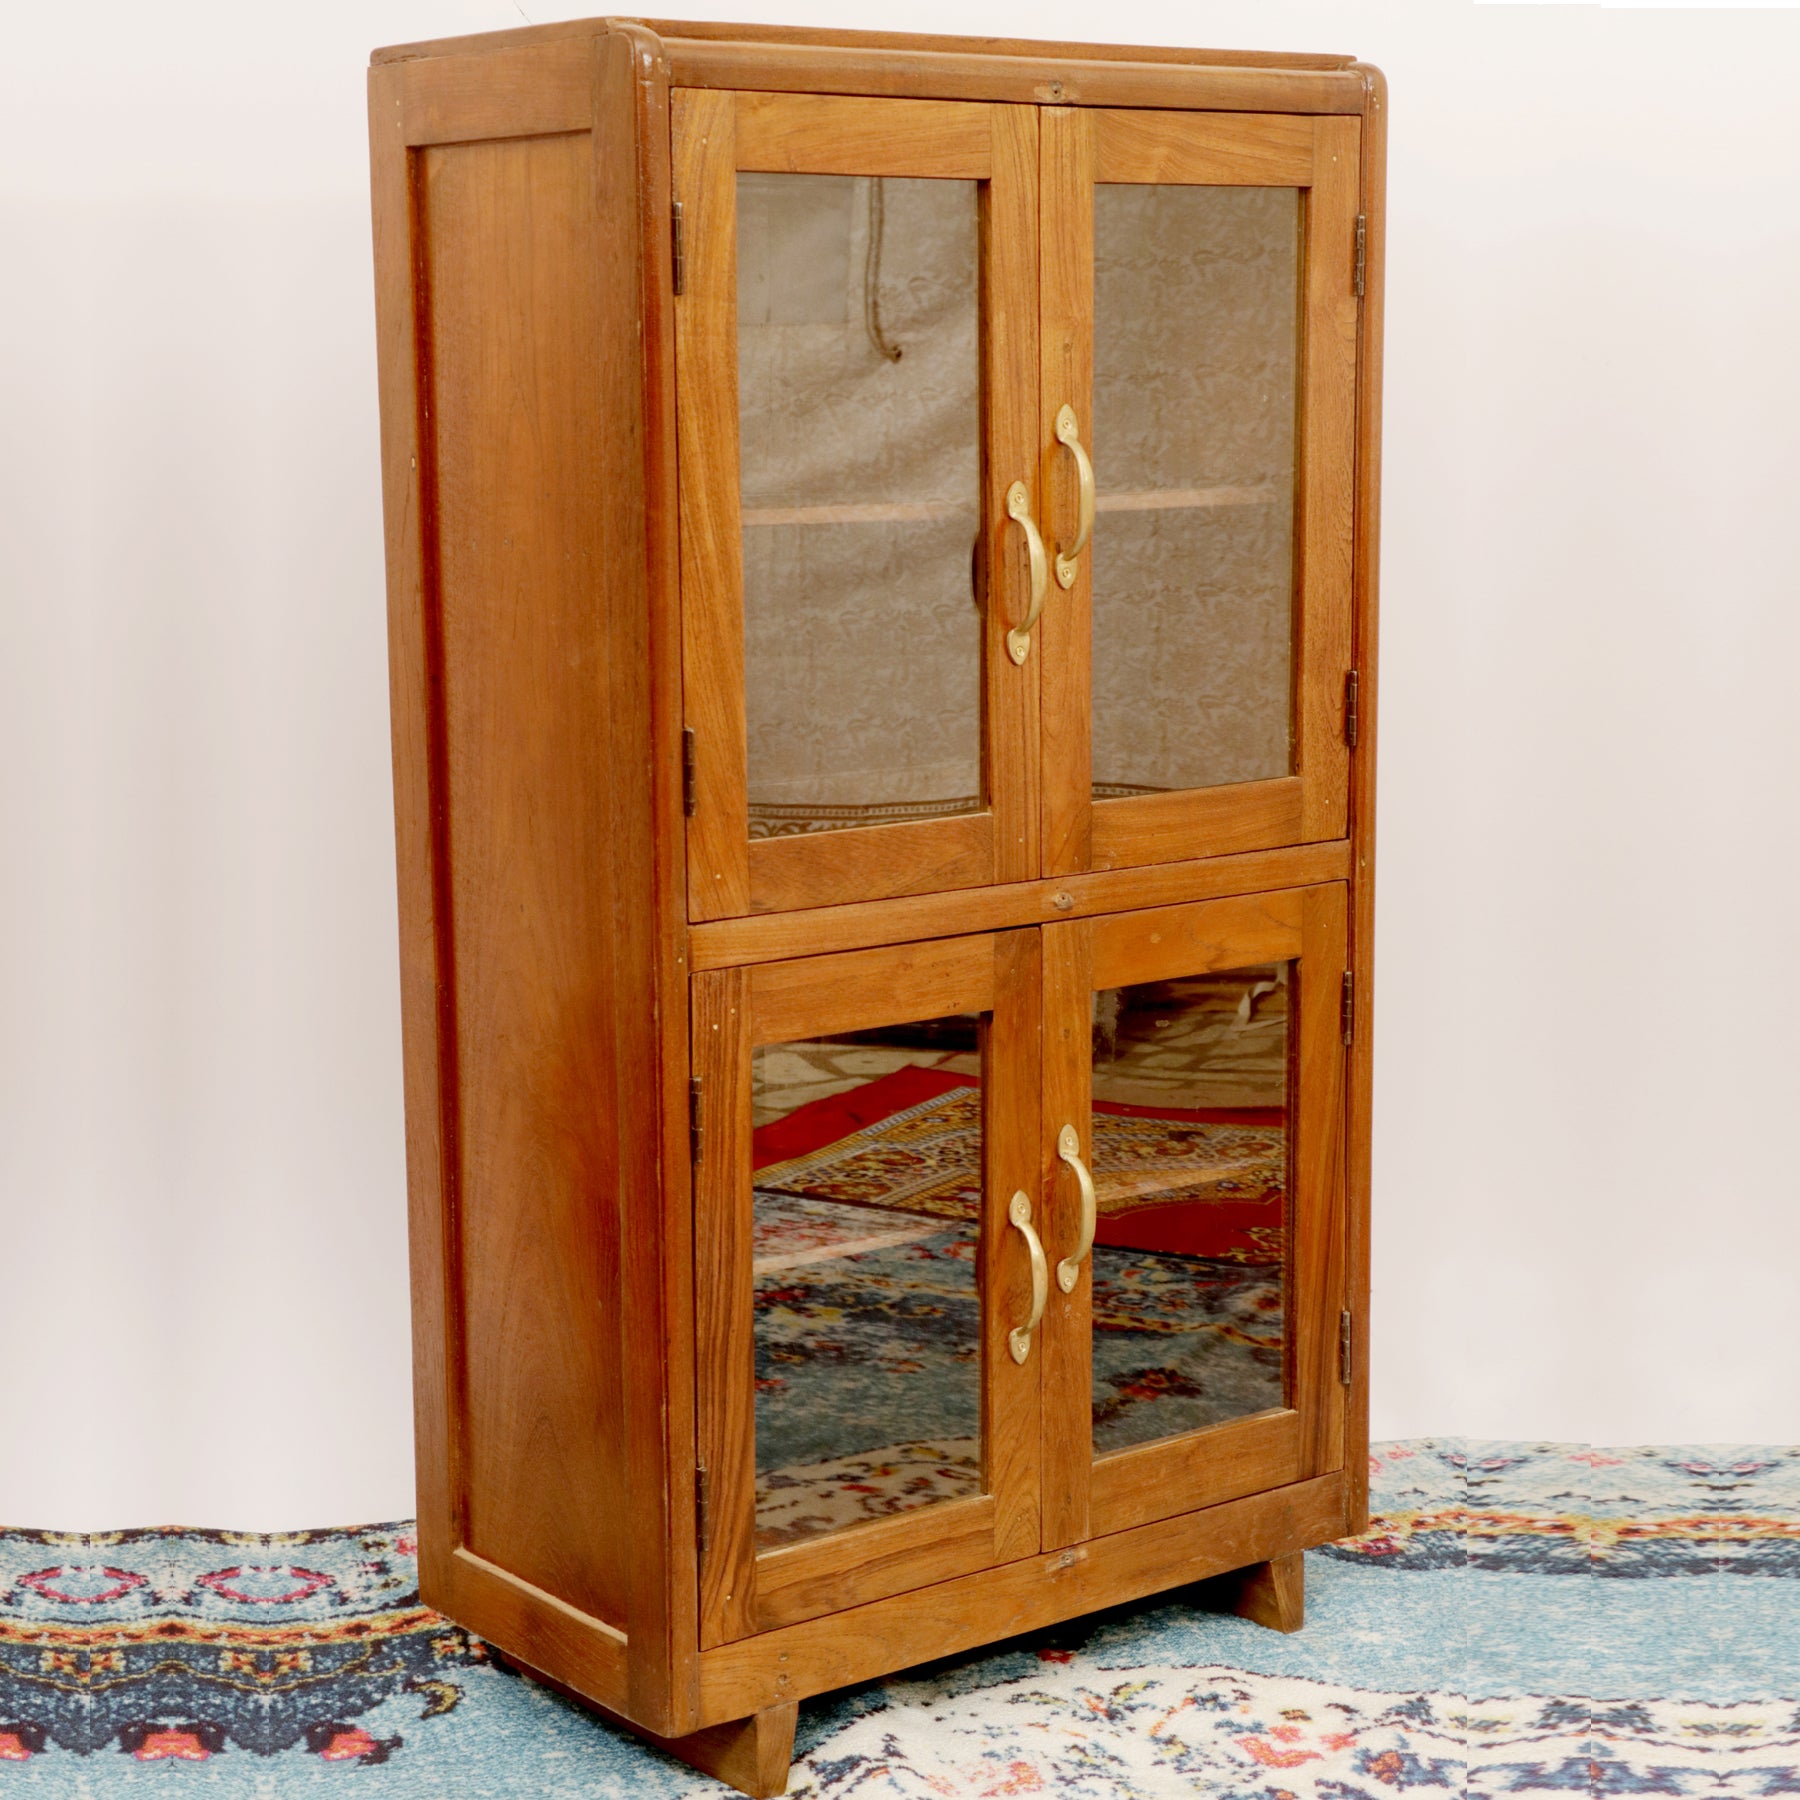 4-Tier Wooden Display Cabinet Showcase